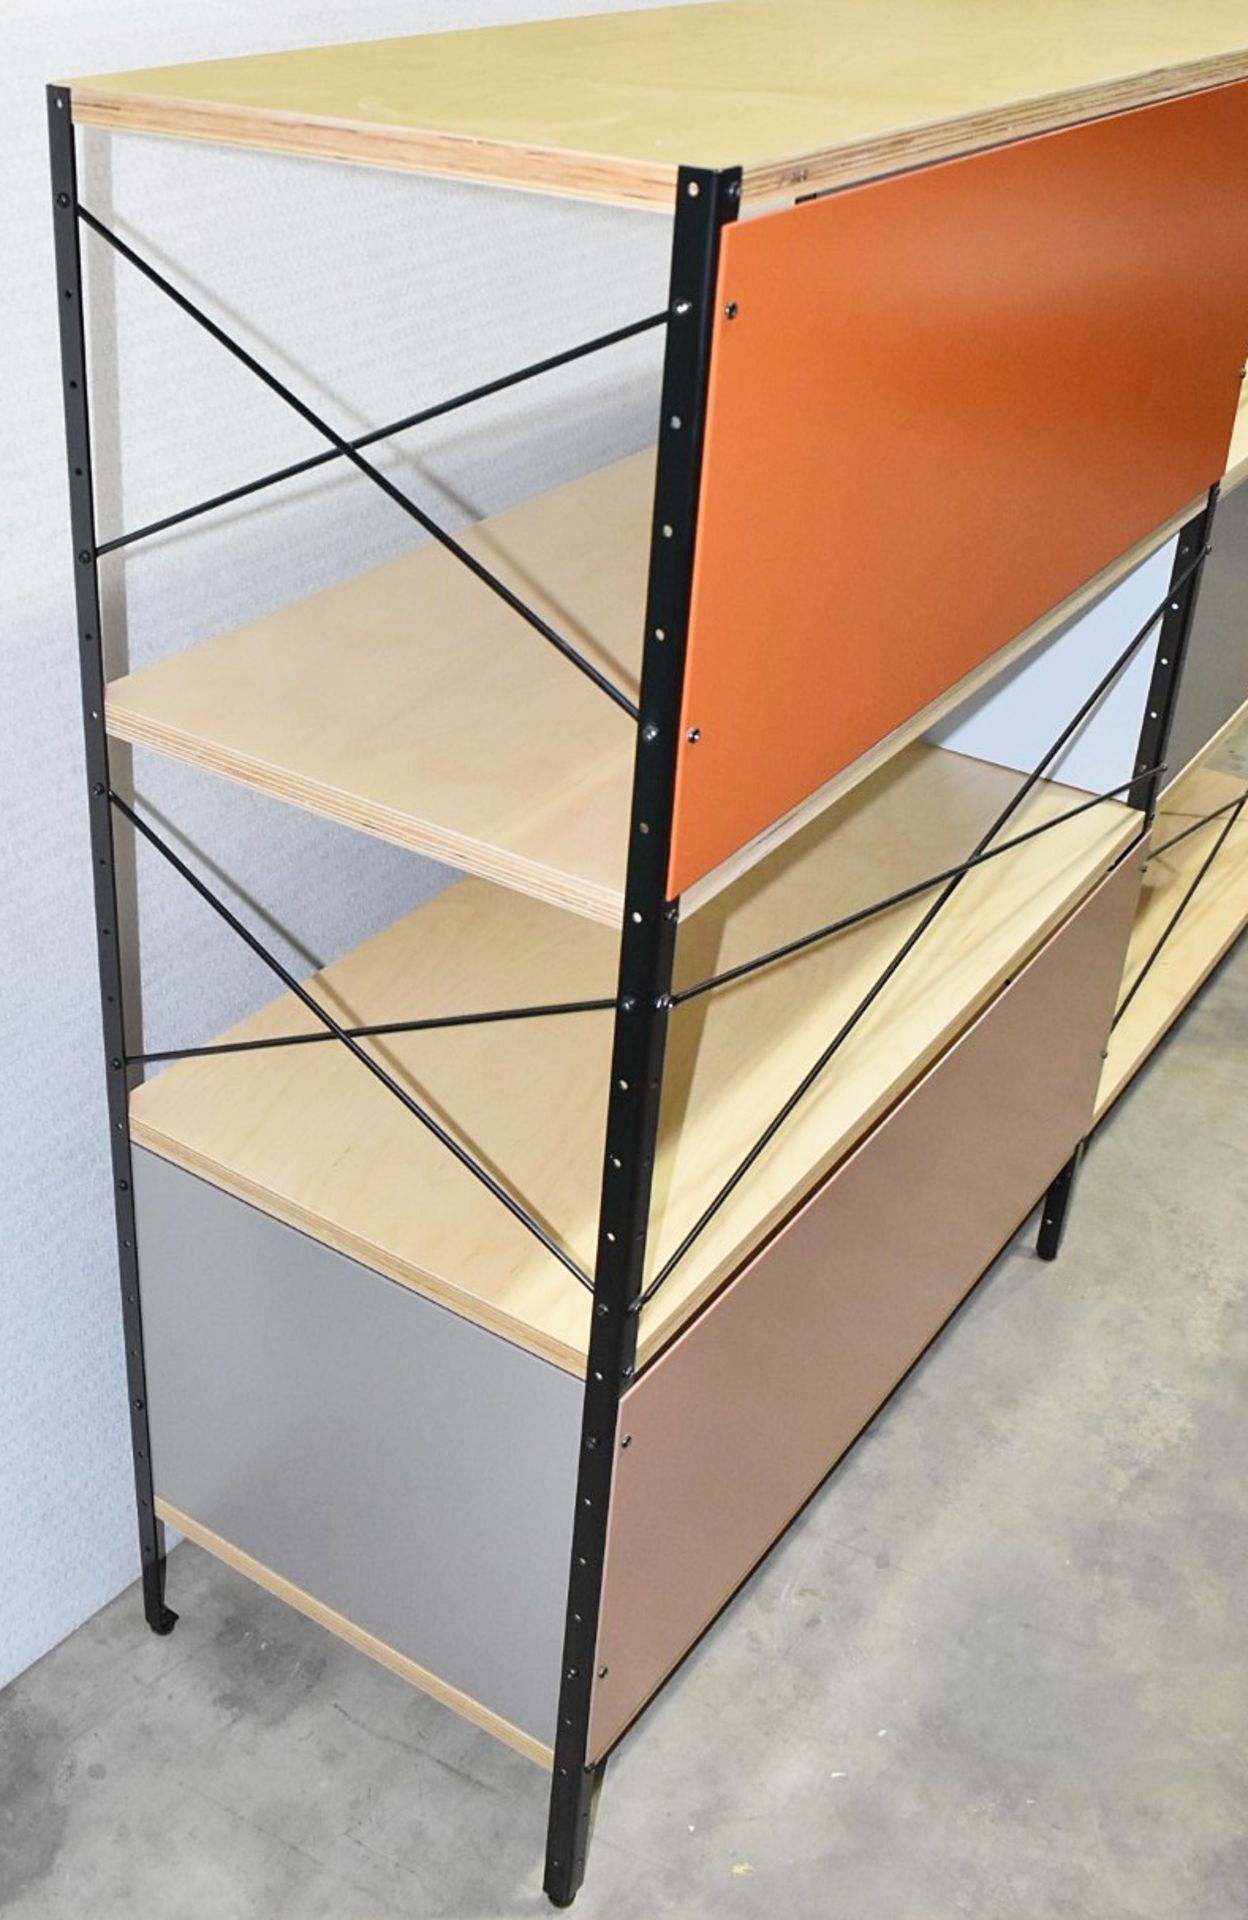 1 x VITRA Eames 'Esu Shelf 3' Designer Bookcase / Storage Unit - Original RRP £2,555 - Image 6 of 7